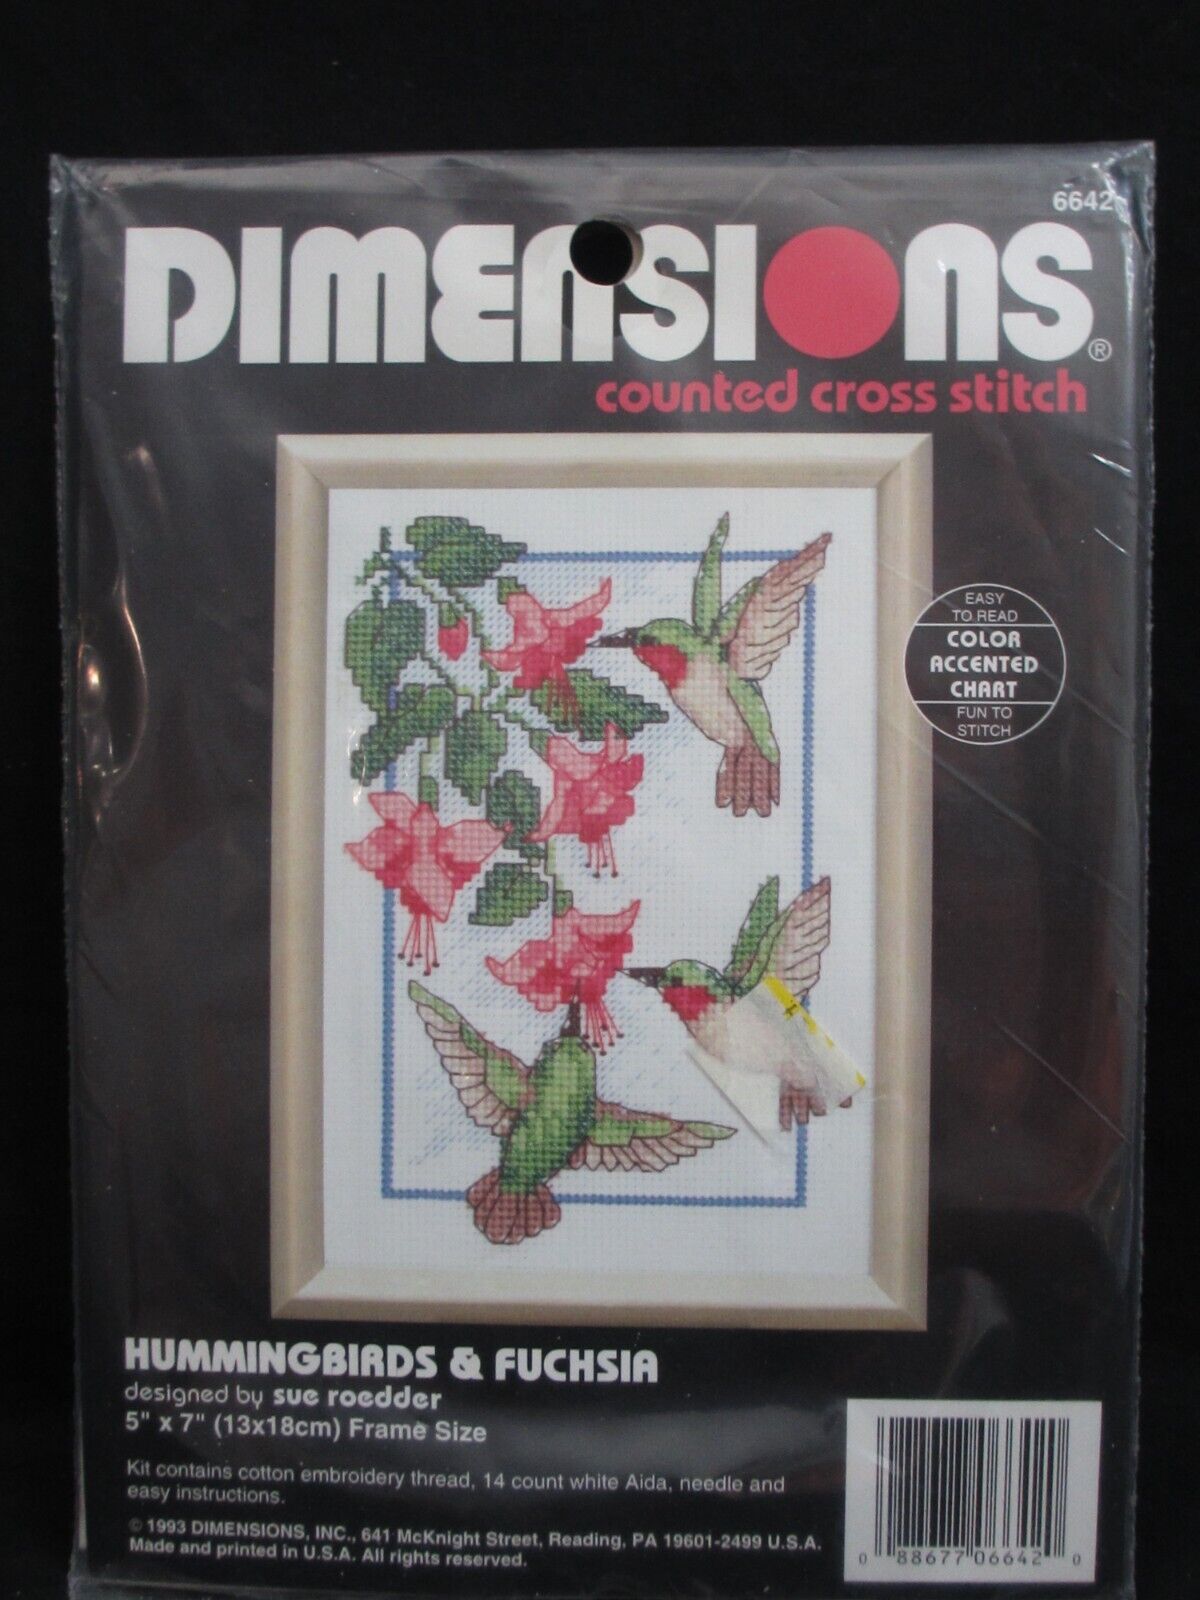 Humminbirds & FUCHSIA, 6642, 13 x 18 cm